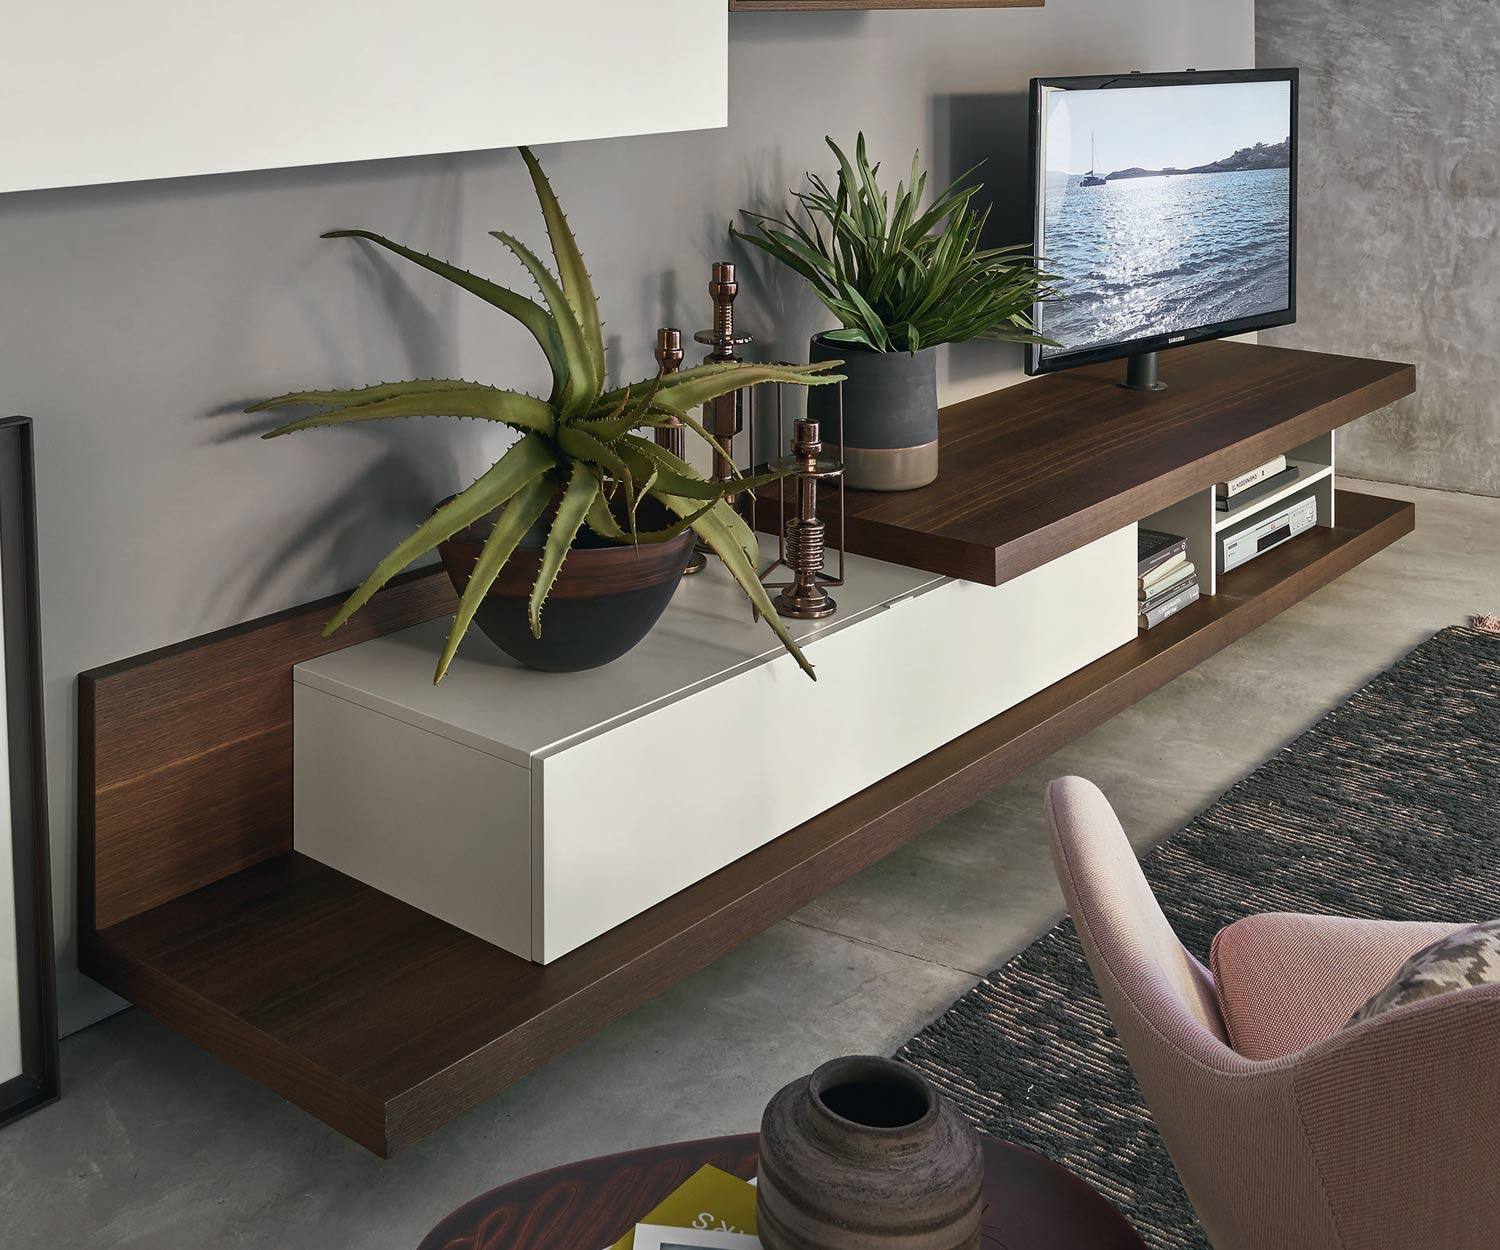 Exclusif Ouvert Livitalia Design Design Lowboard Open avec support TV